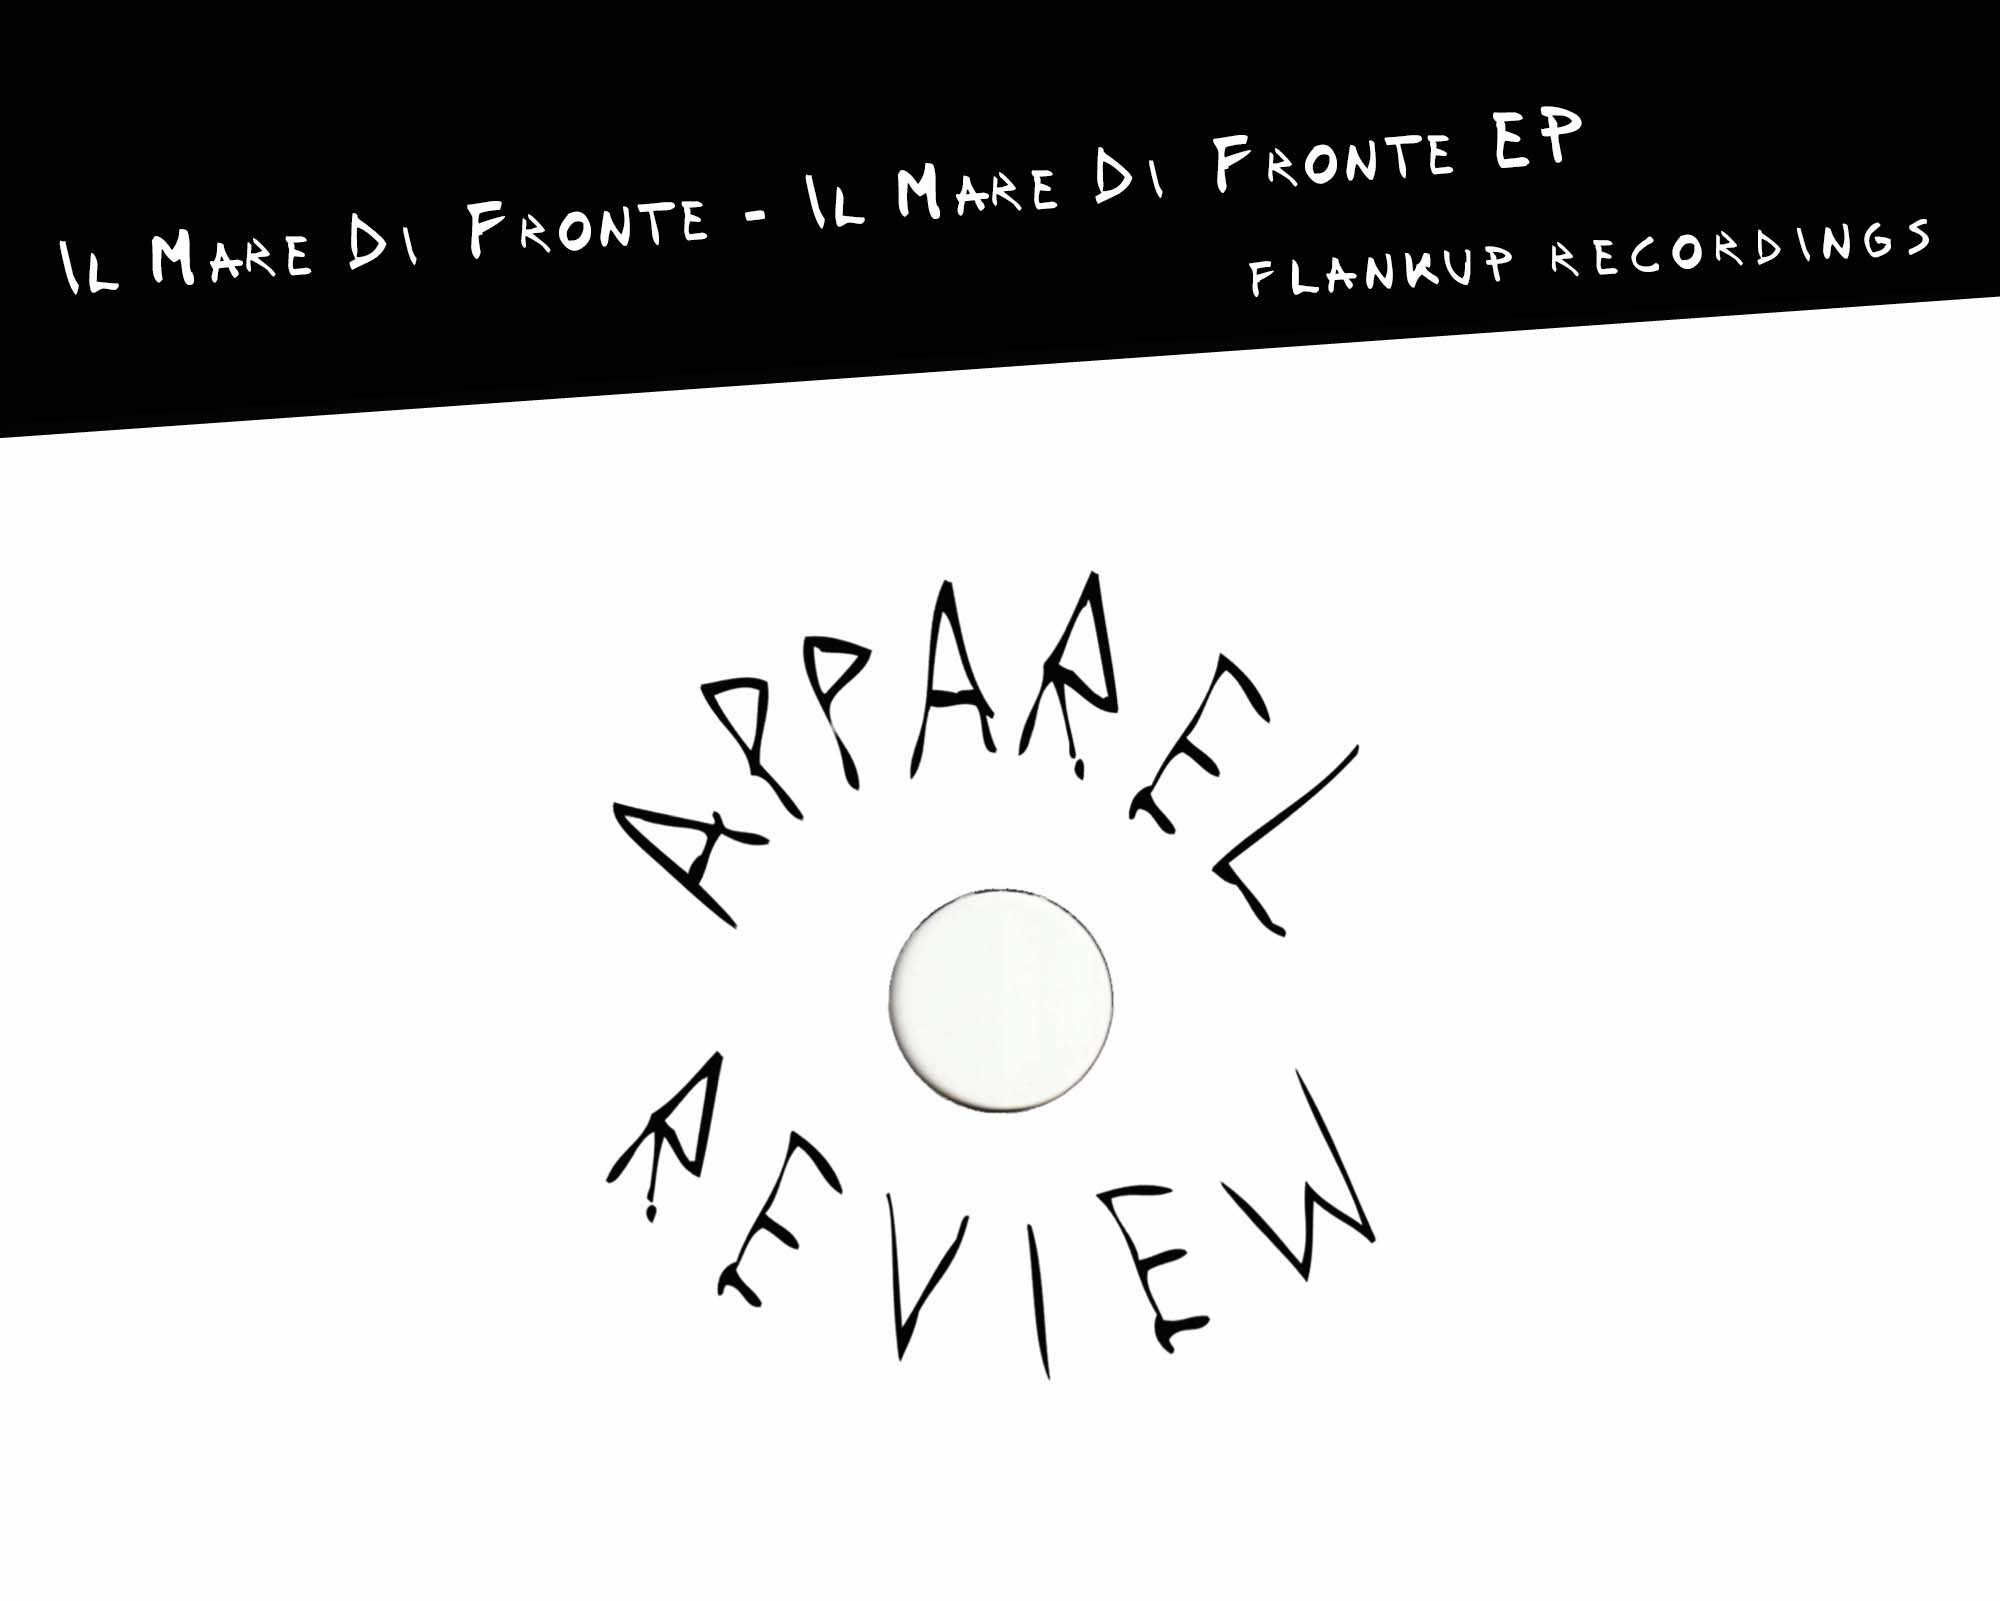 Apparel-Review Flankup Recordings2